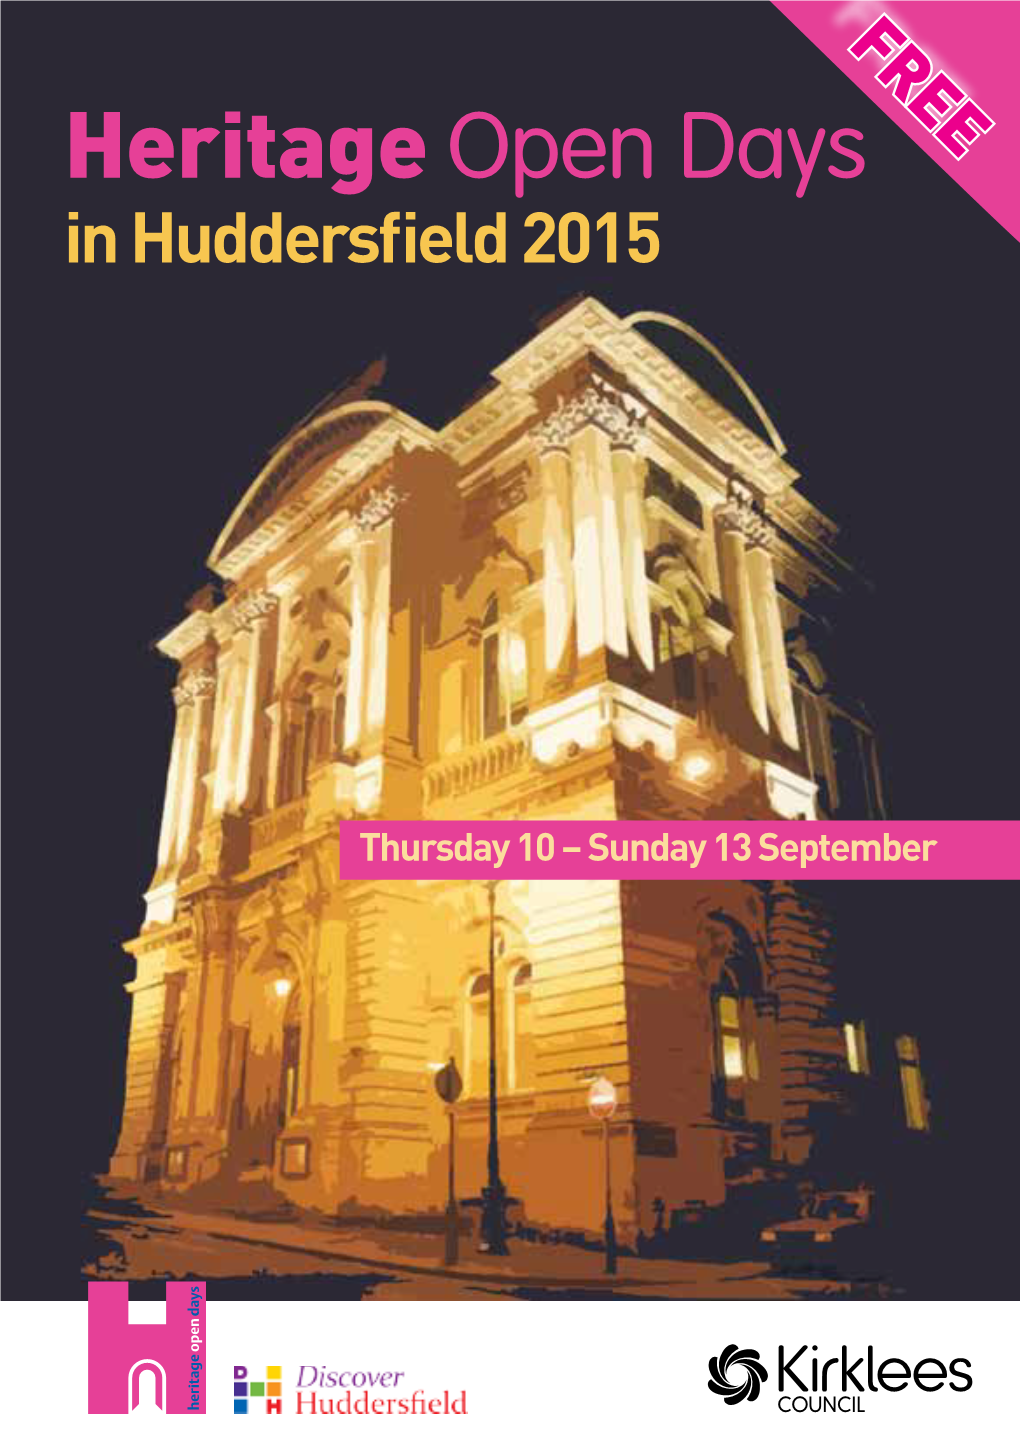 Heritage Open Days in Huddersfield 2015